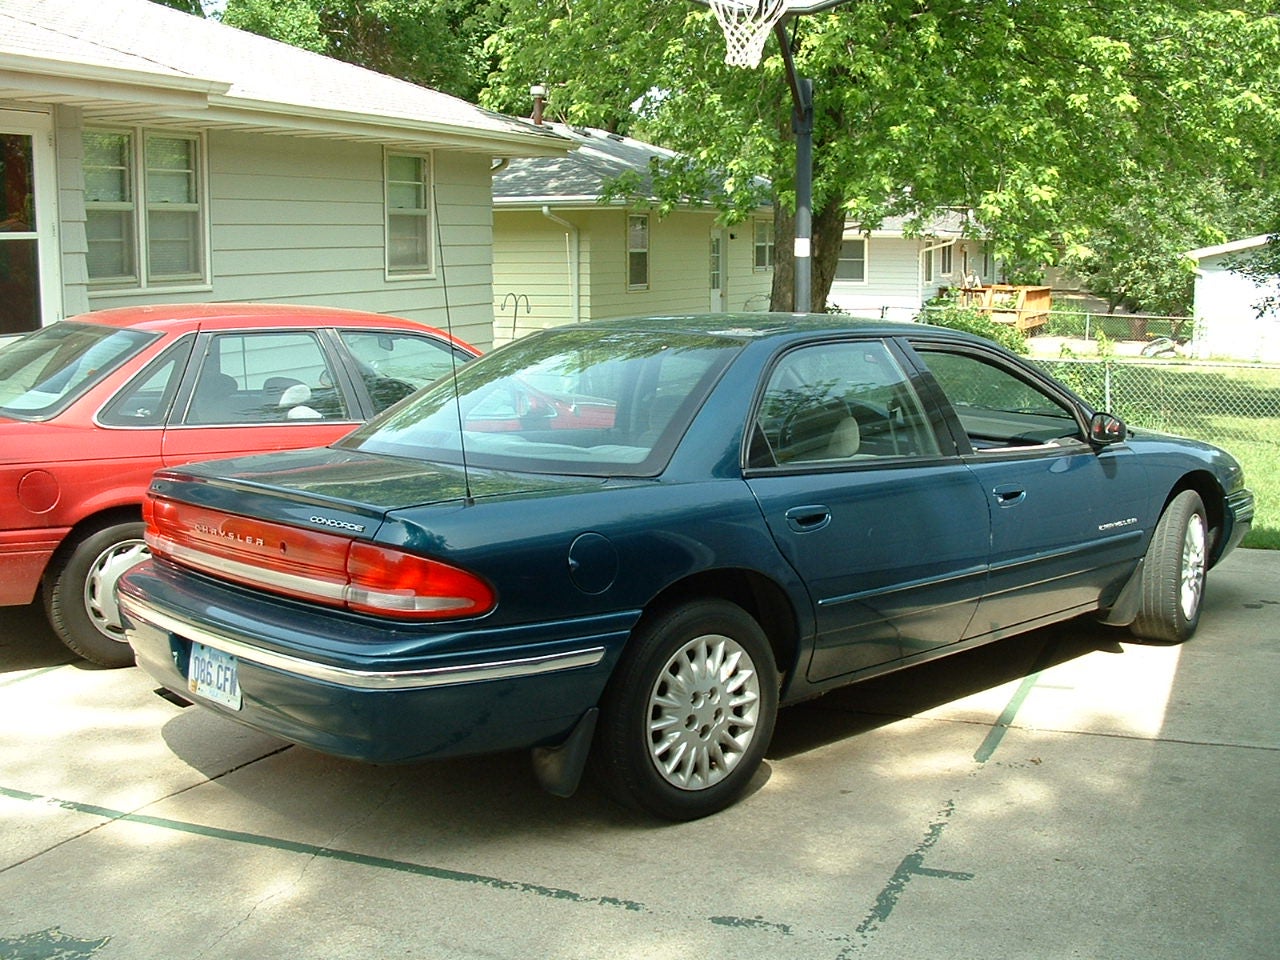 1997 Chrysler concorde gas mileage #2